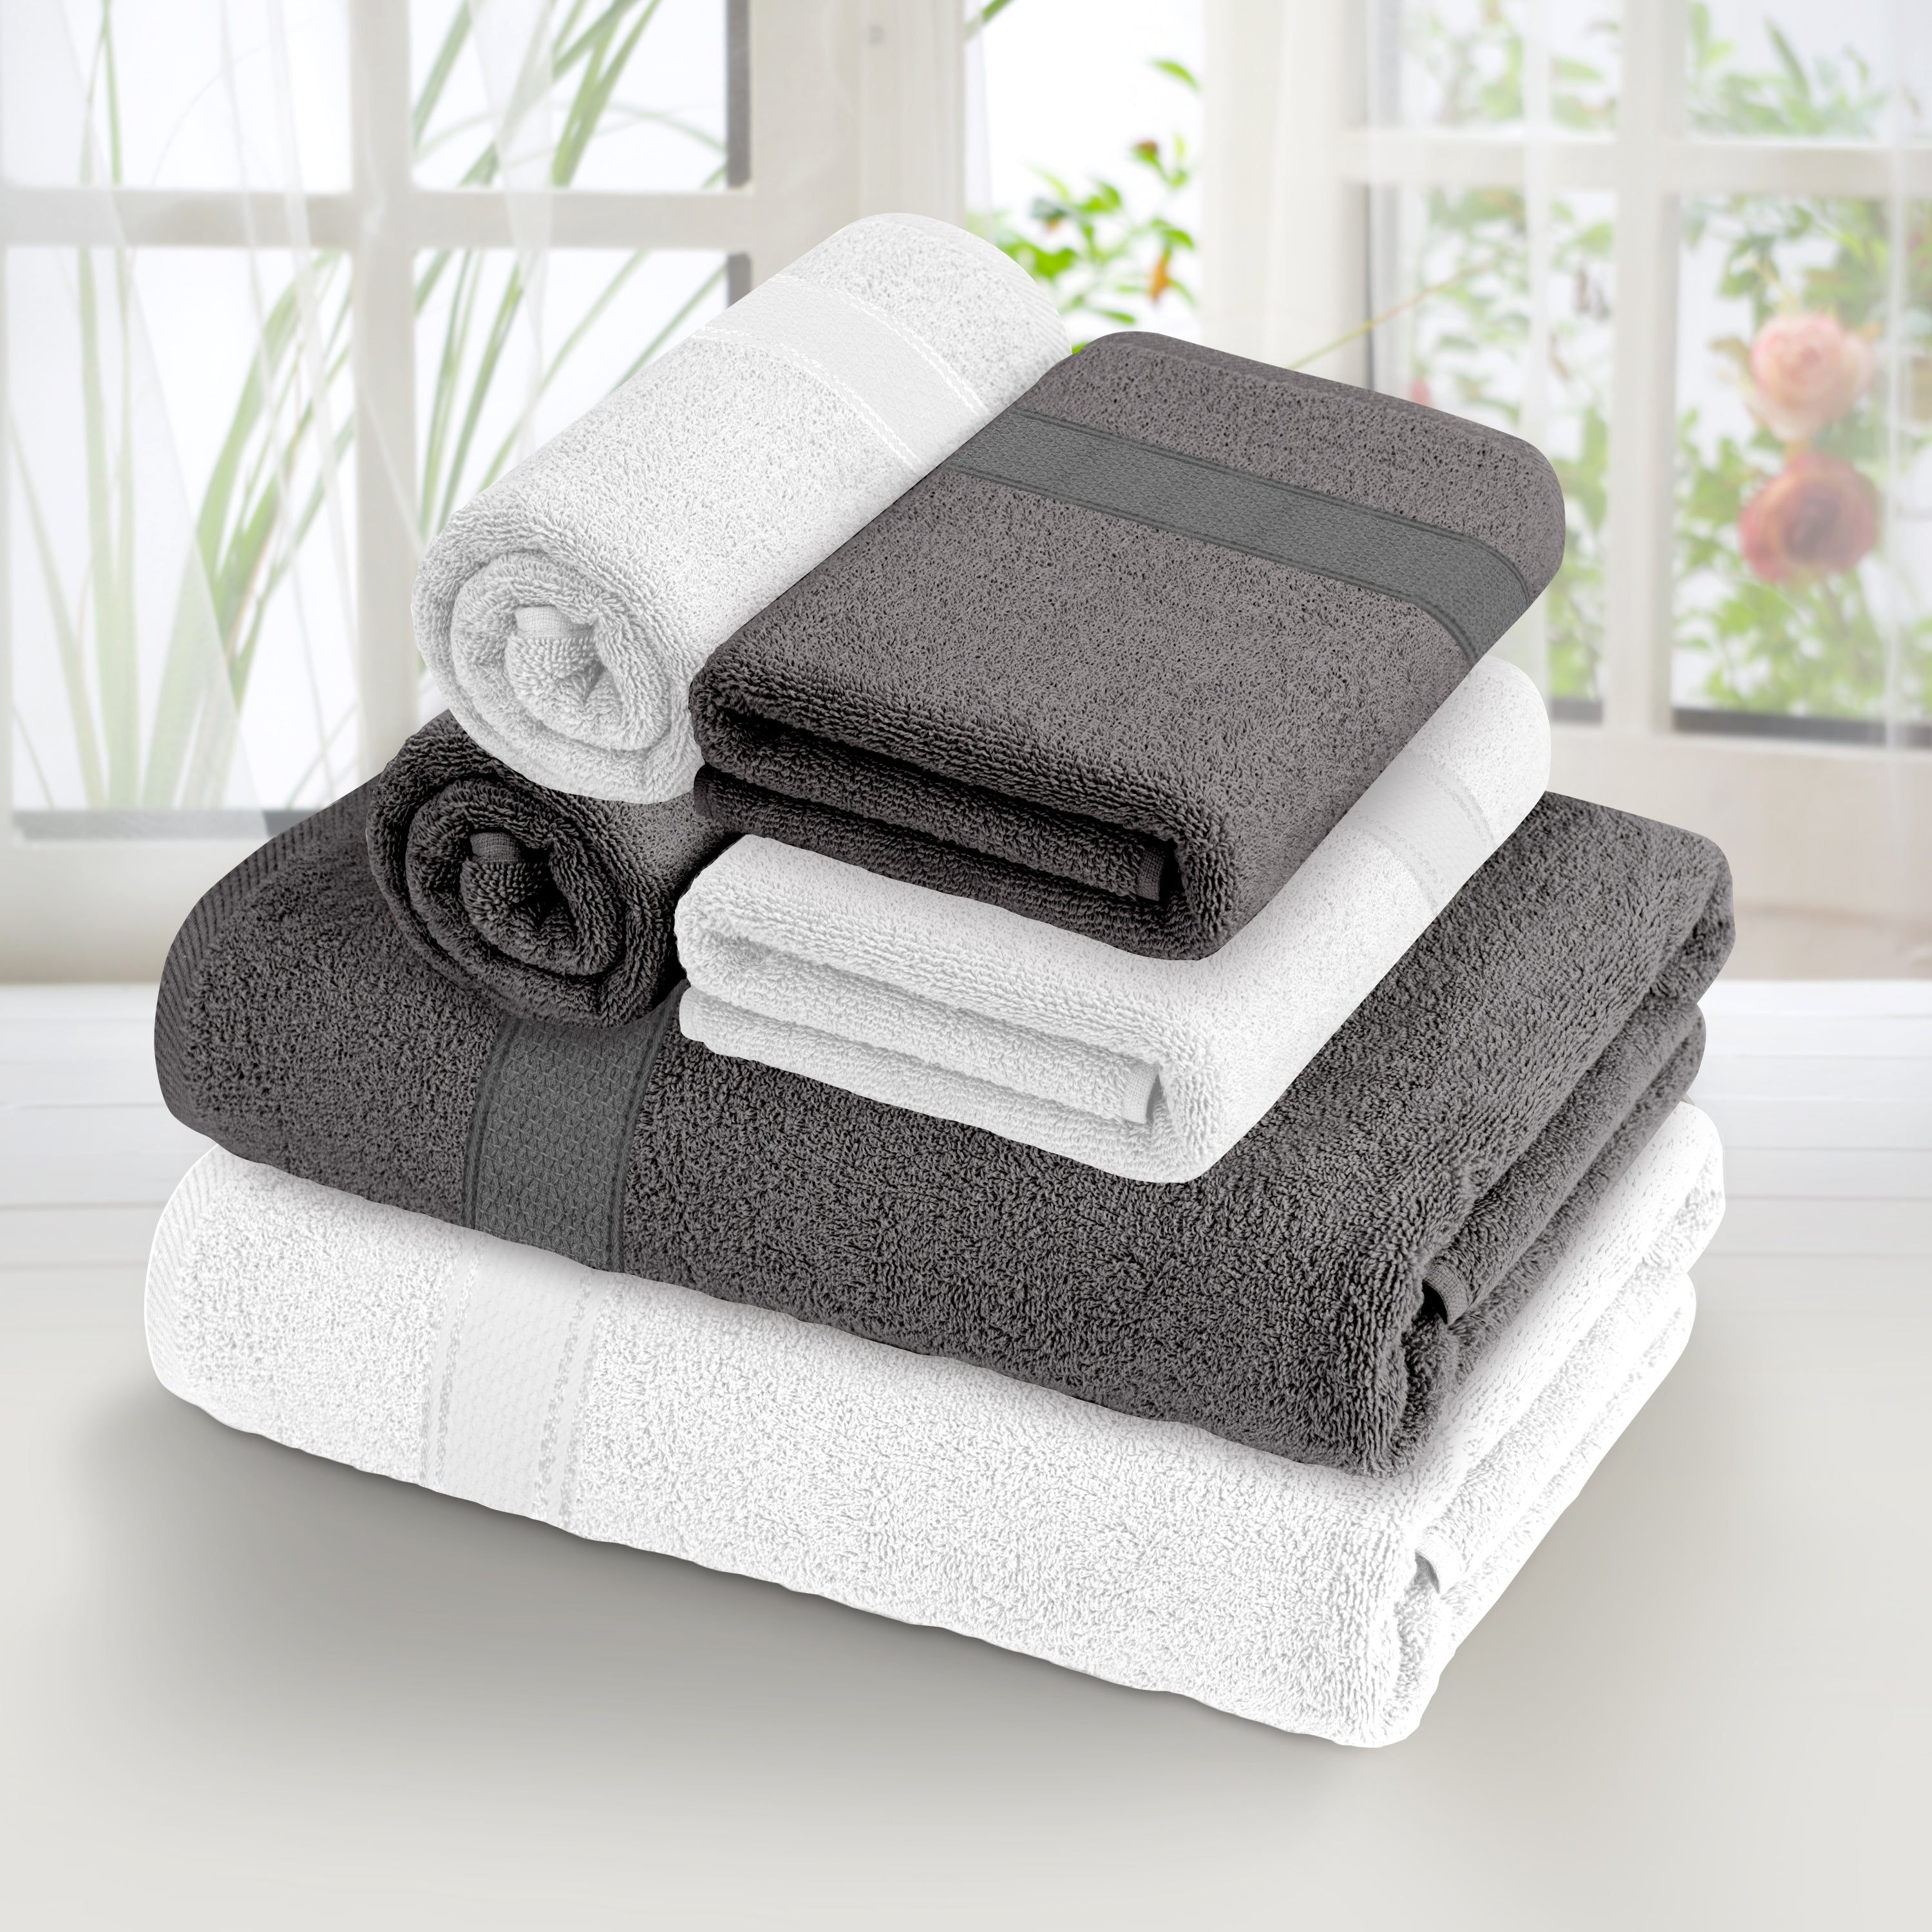 Aquacado 2 Pc Bath & 4 Pc Hand Towel Set of 6 White & Charcoal Grey